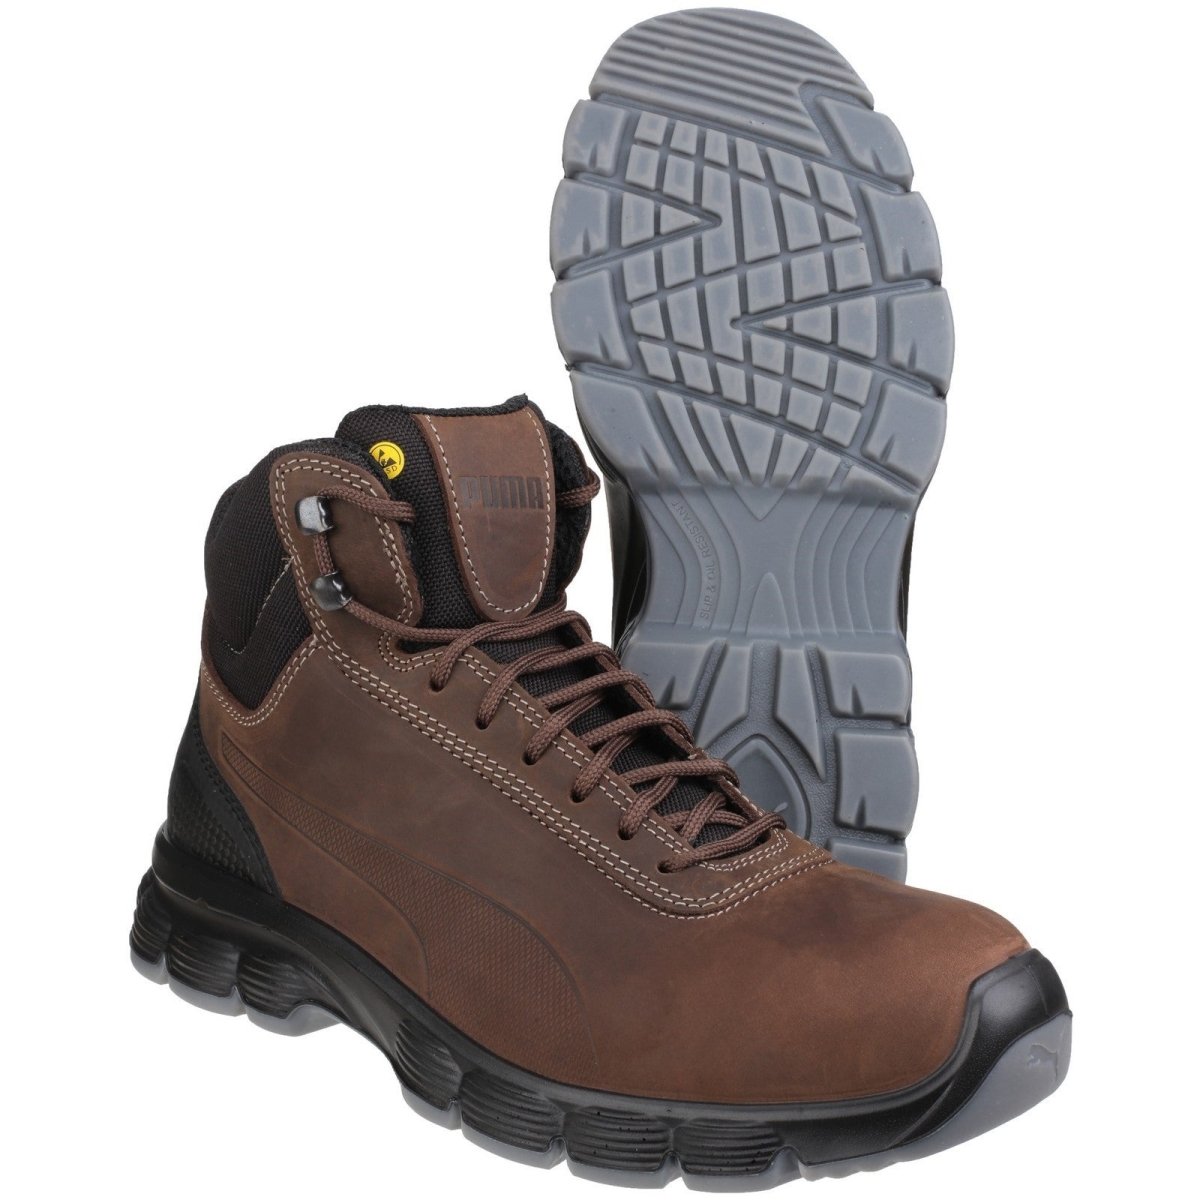 Puma Condor Mid Steel Toe Cap Mens Safety Boots - Shoe Store Direct